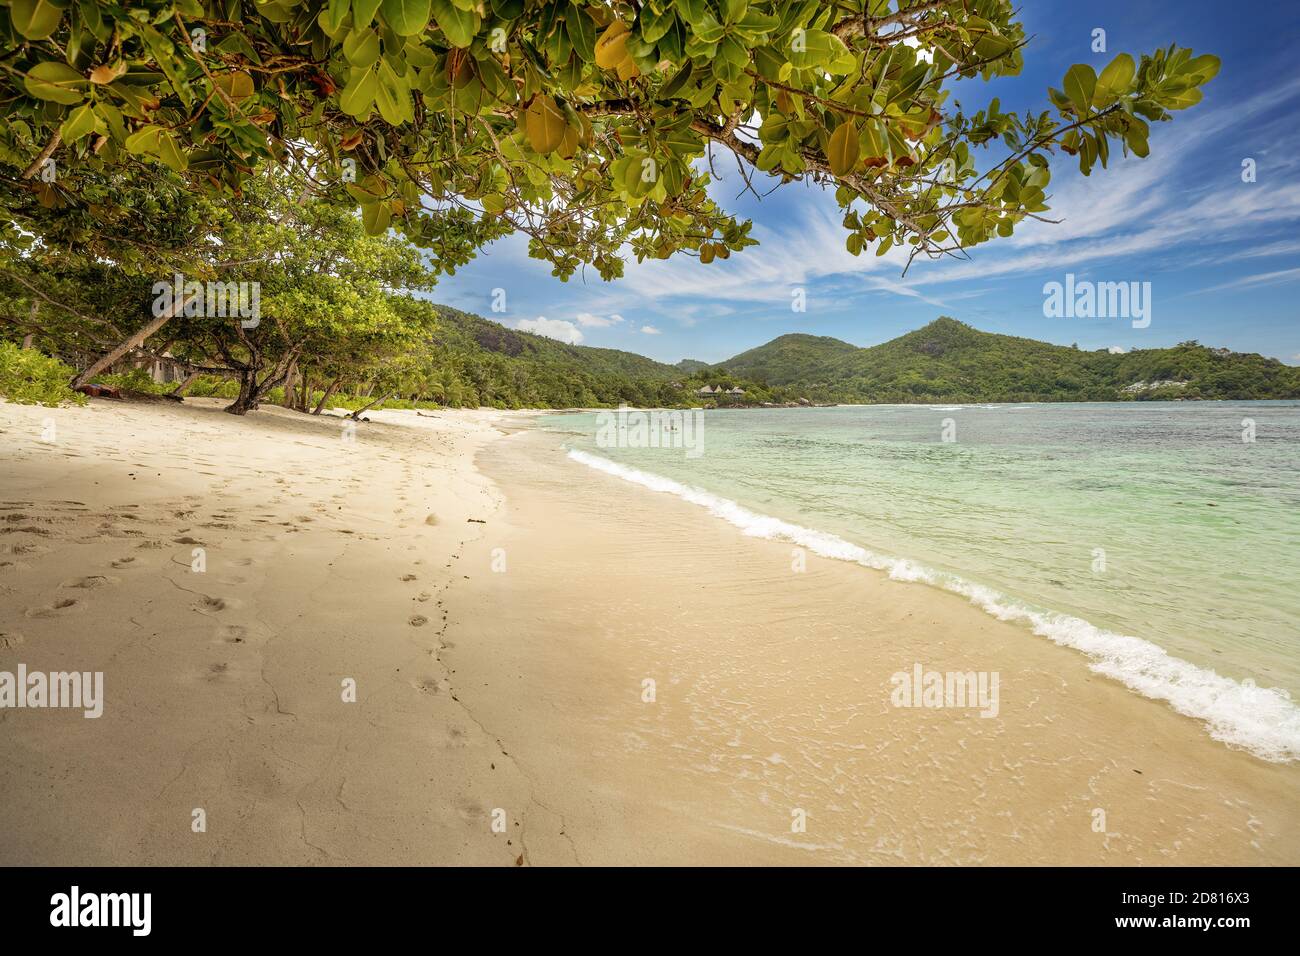 Famous tropical coral sandy palm beach Baie Lazare, Seychelles, Mahe island, Indian ocean. Coral beach sand and lush vegetation. A heavenly tourist de Stock Photo